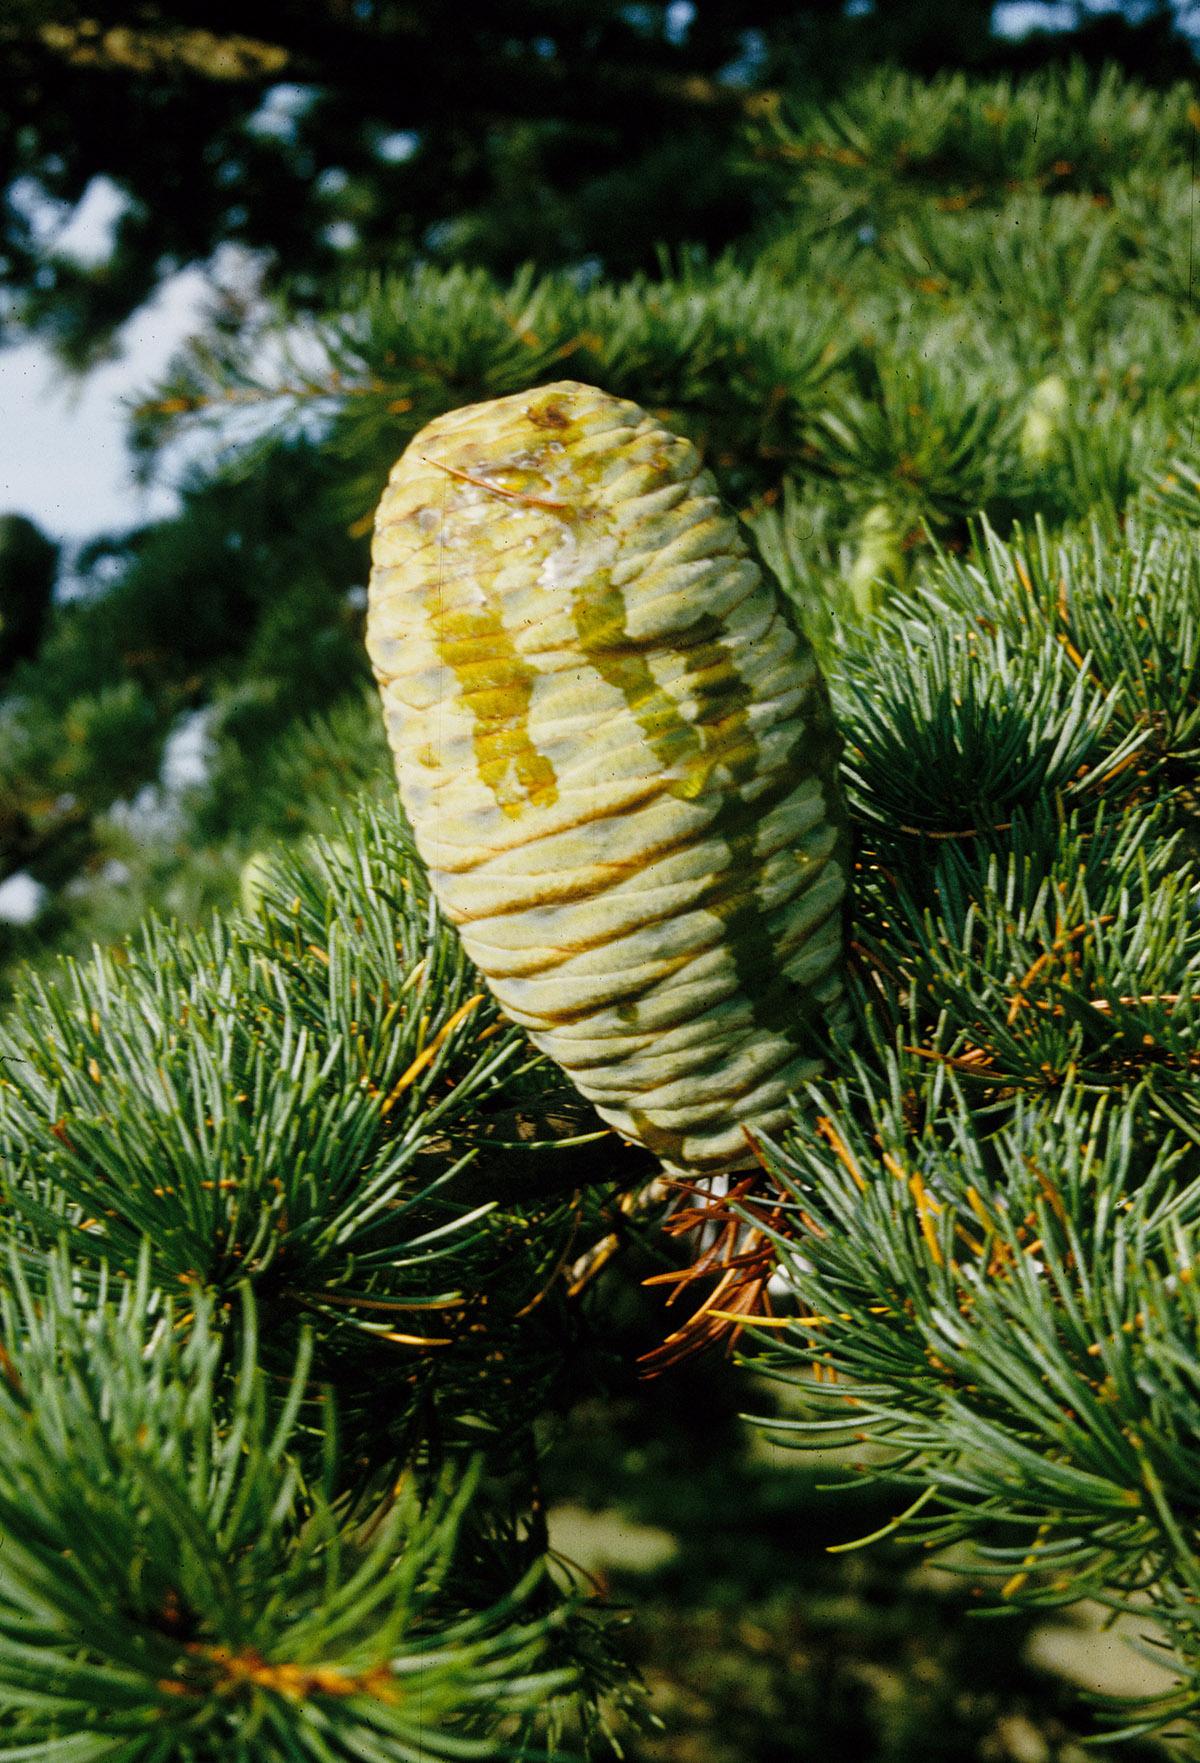 Cedrus libani subsp. stenocoma cone